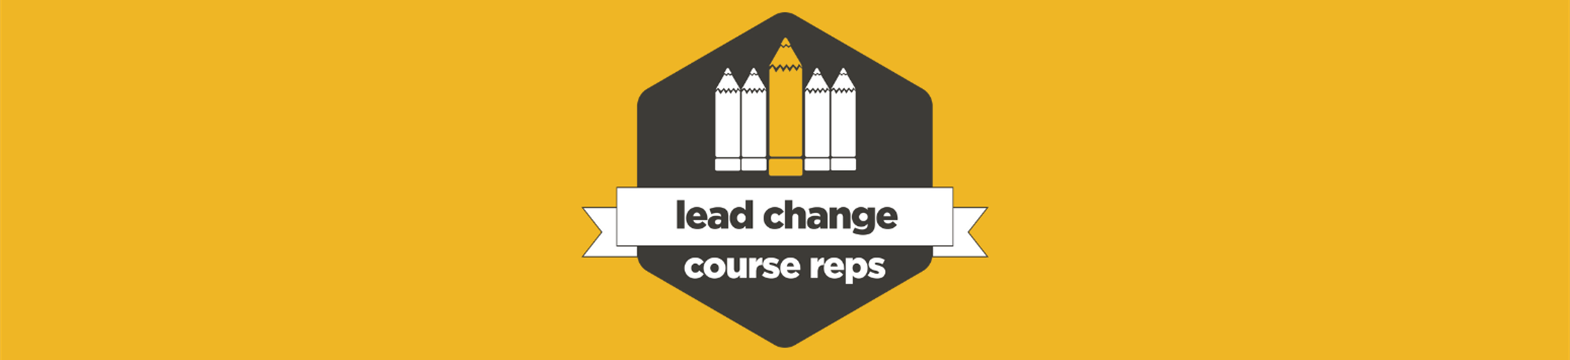 "Course Reps - Lead Change"